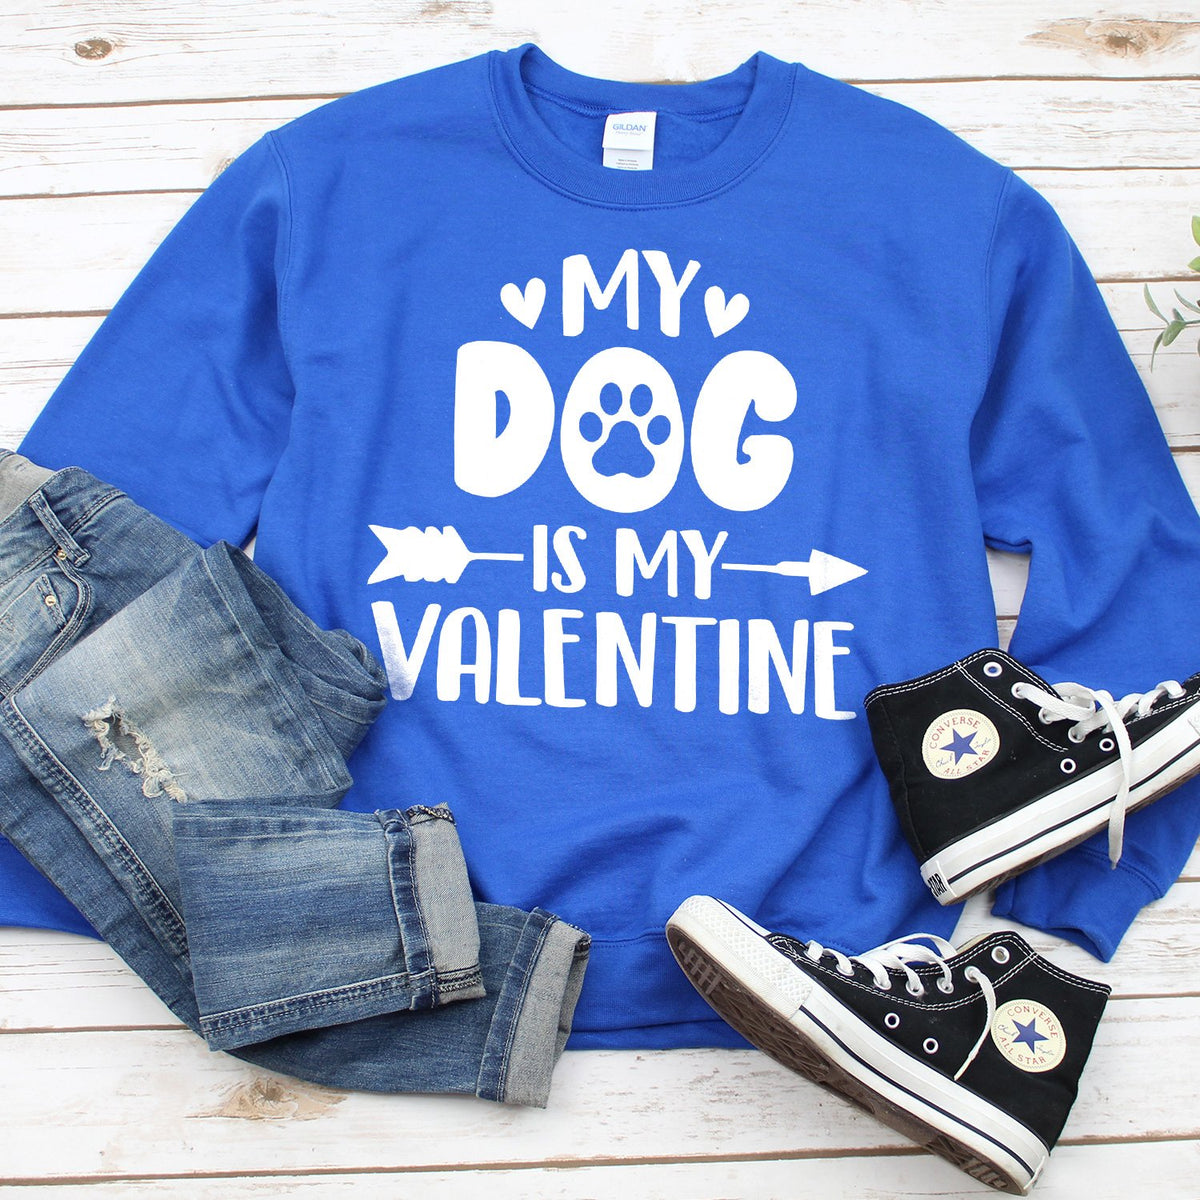 My Dog Is My Valentine - Long Sleeve Heavy Crewneck Sweatshirt